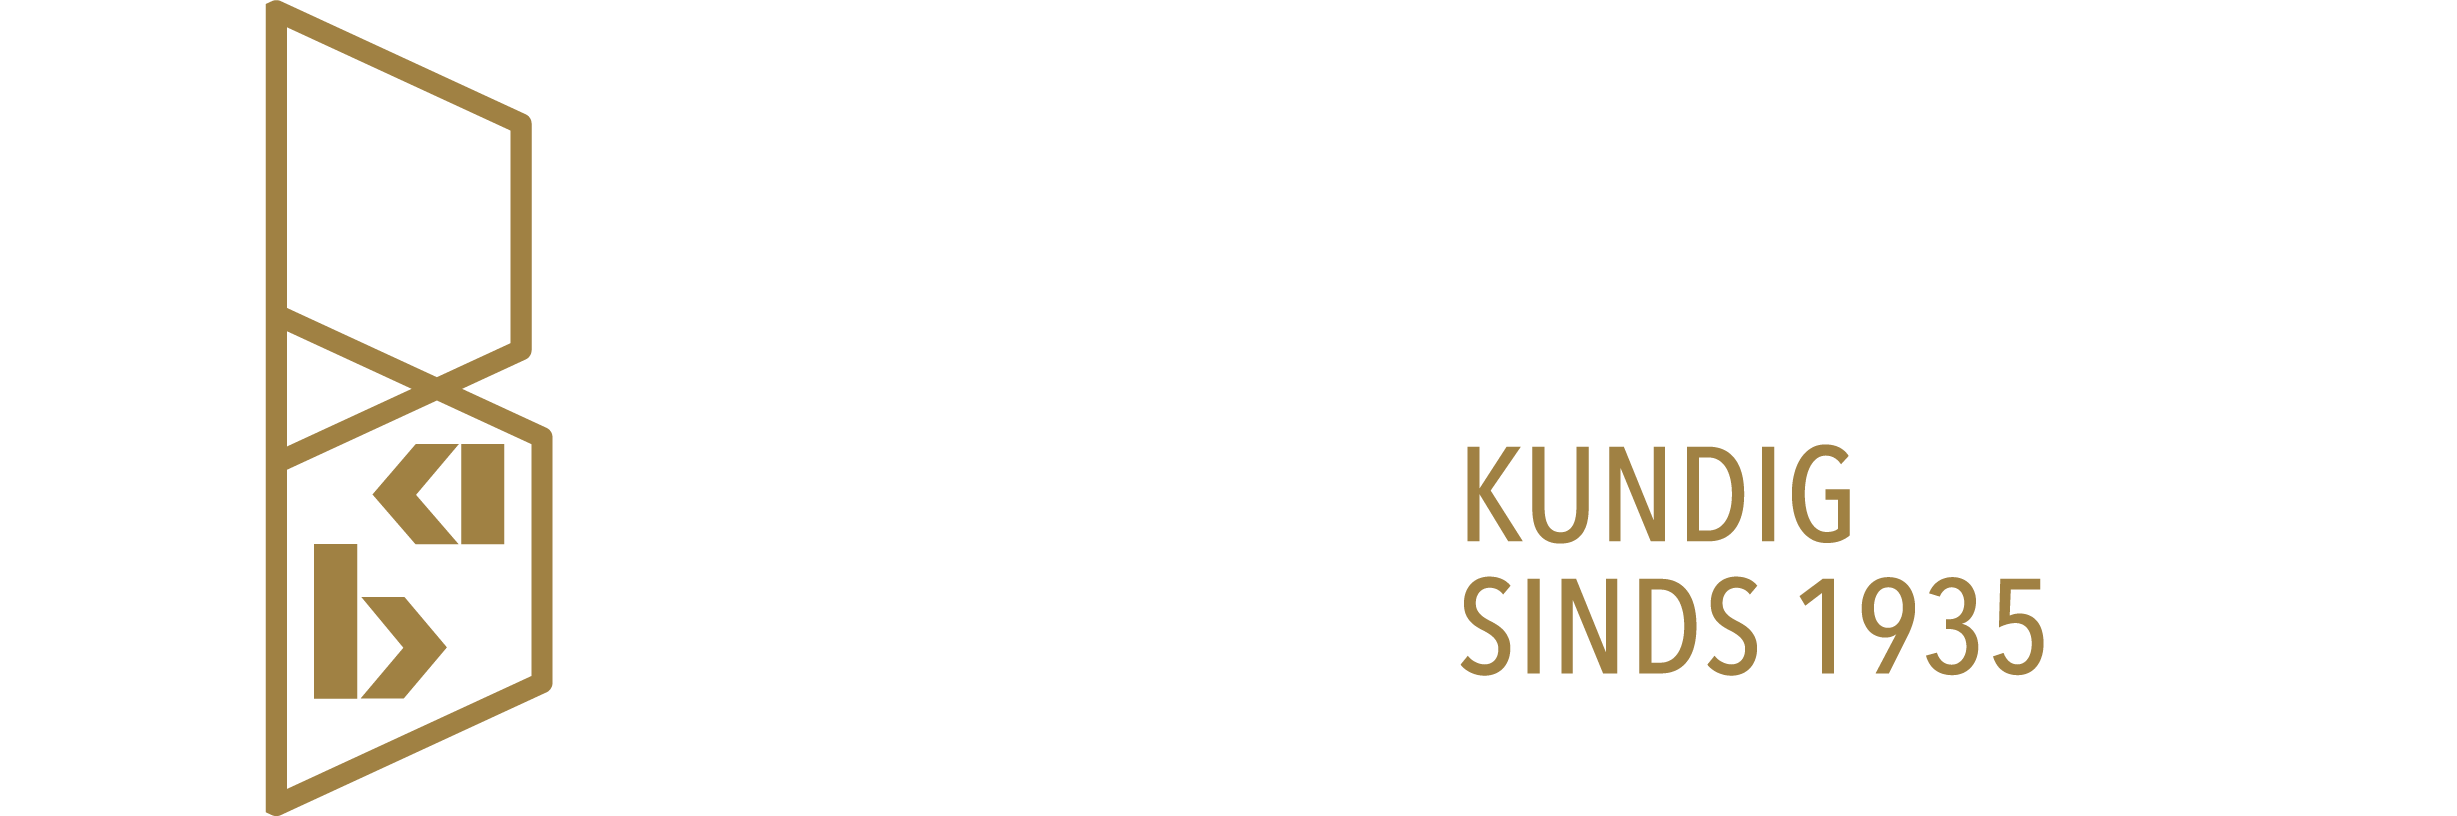 borrenbergsbouw logo witbruingoud def v02